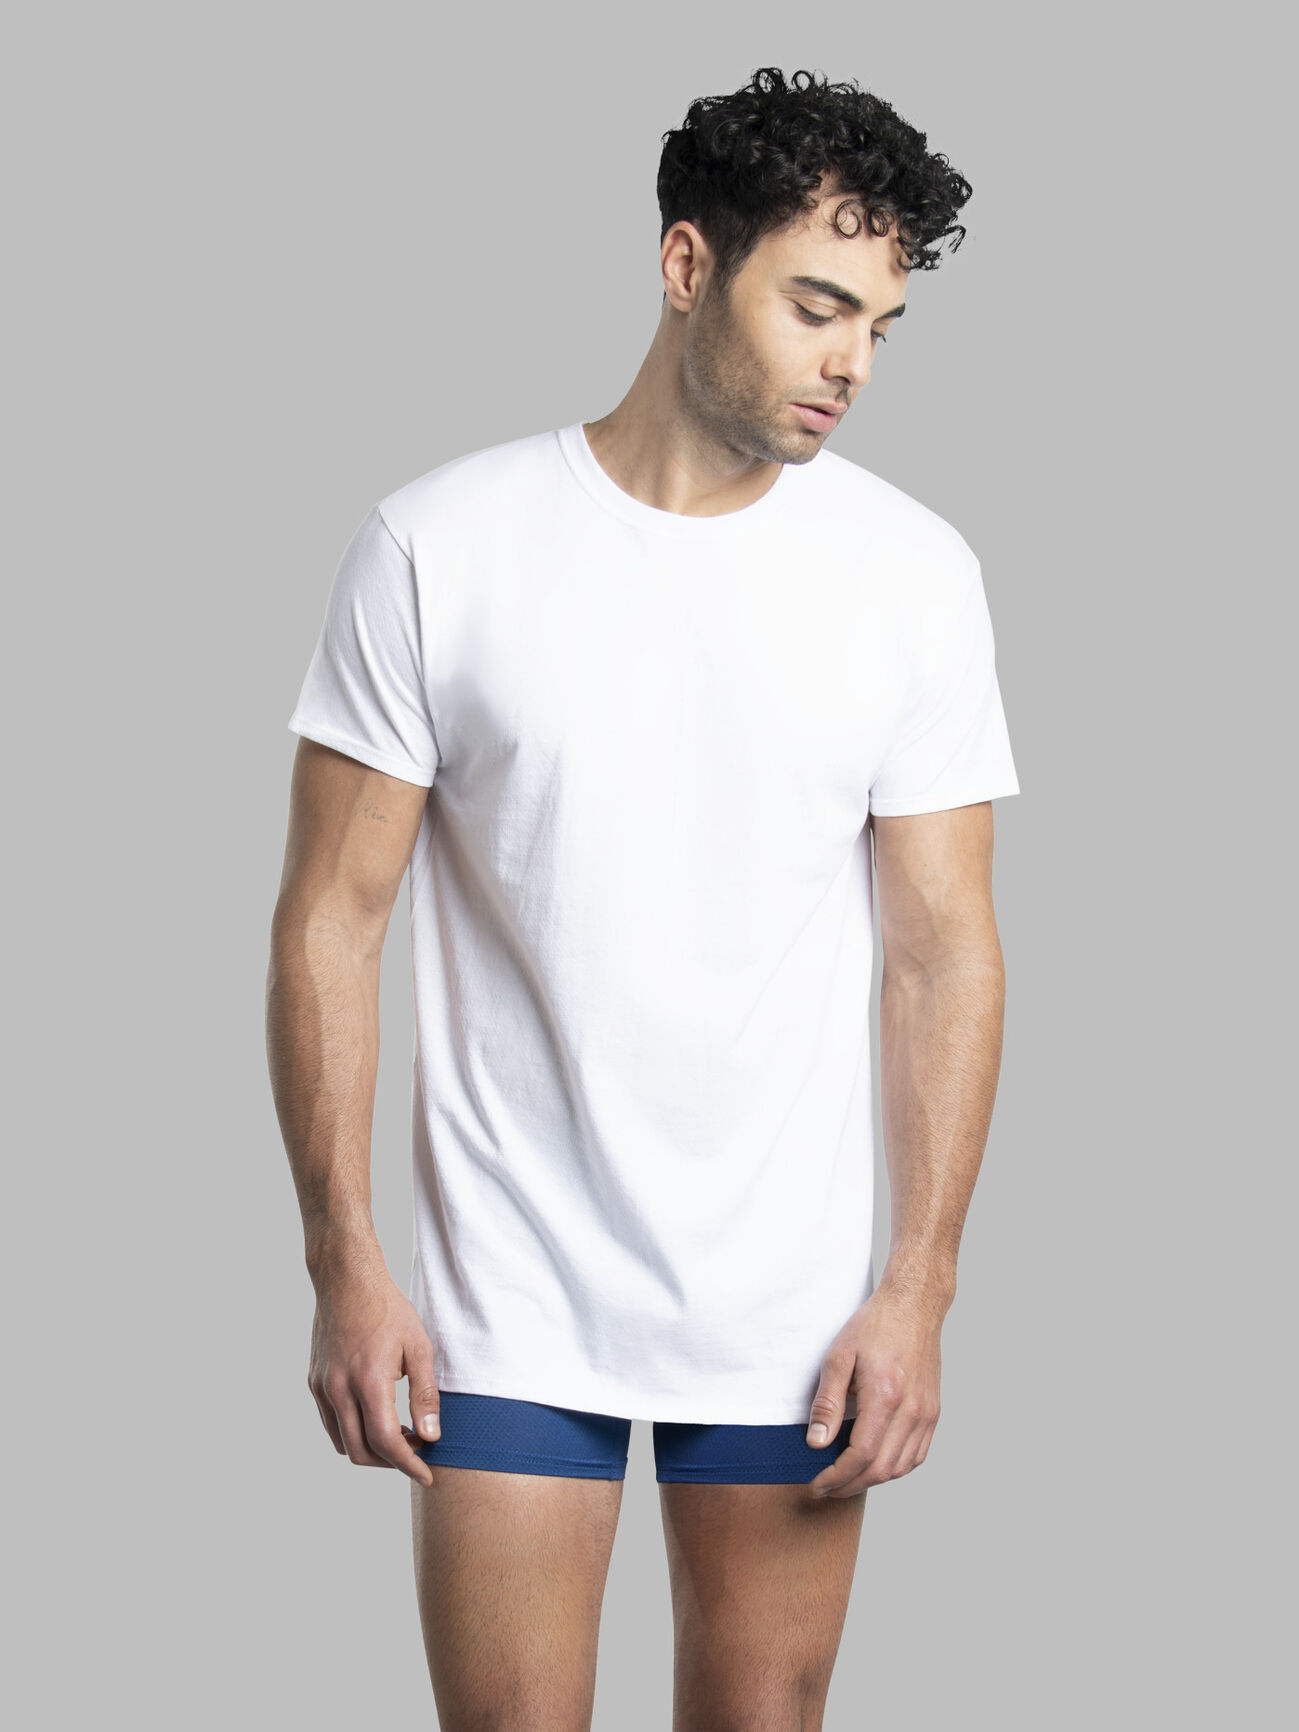 Essentials Women's Slim-Fit Short-Sleeve Crewneck T-Shirt, Pack of 2